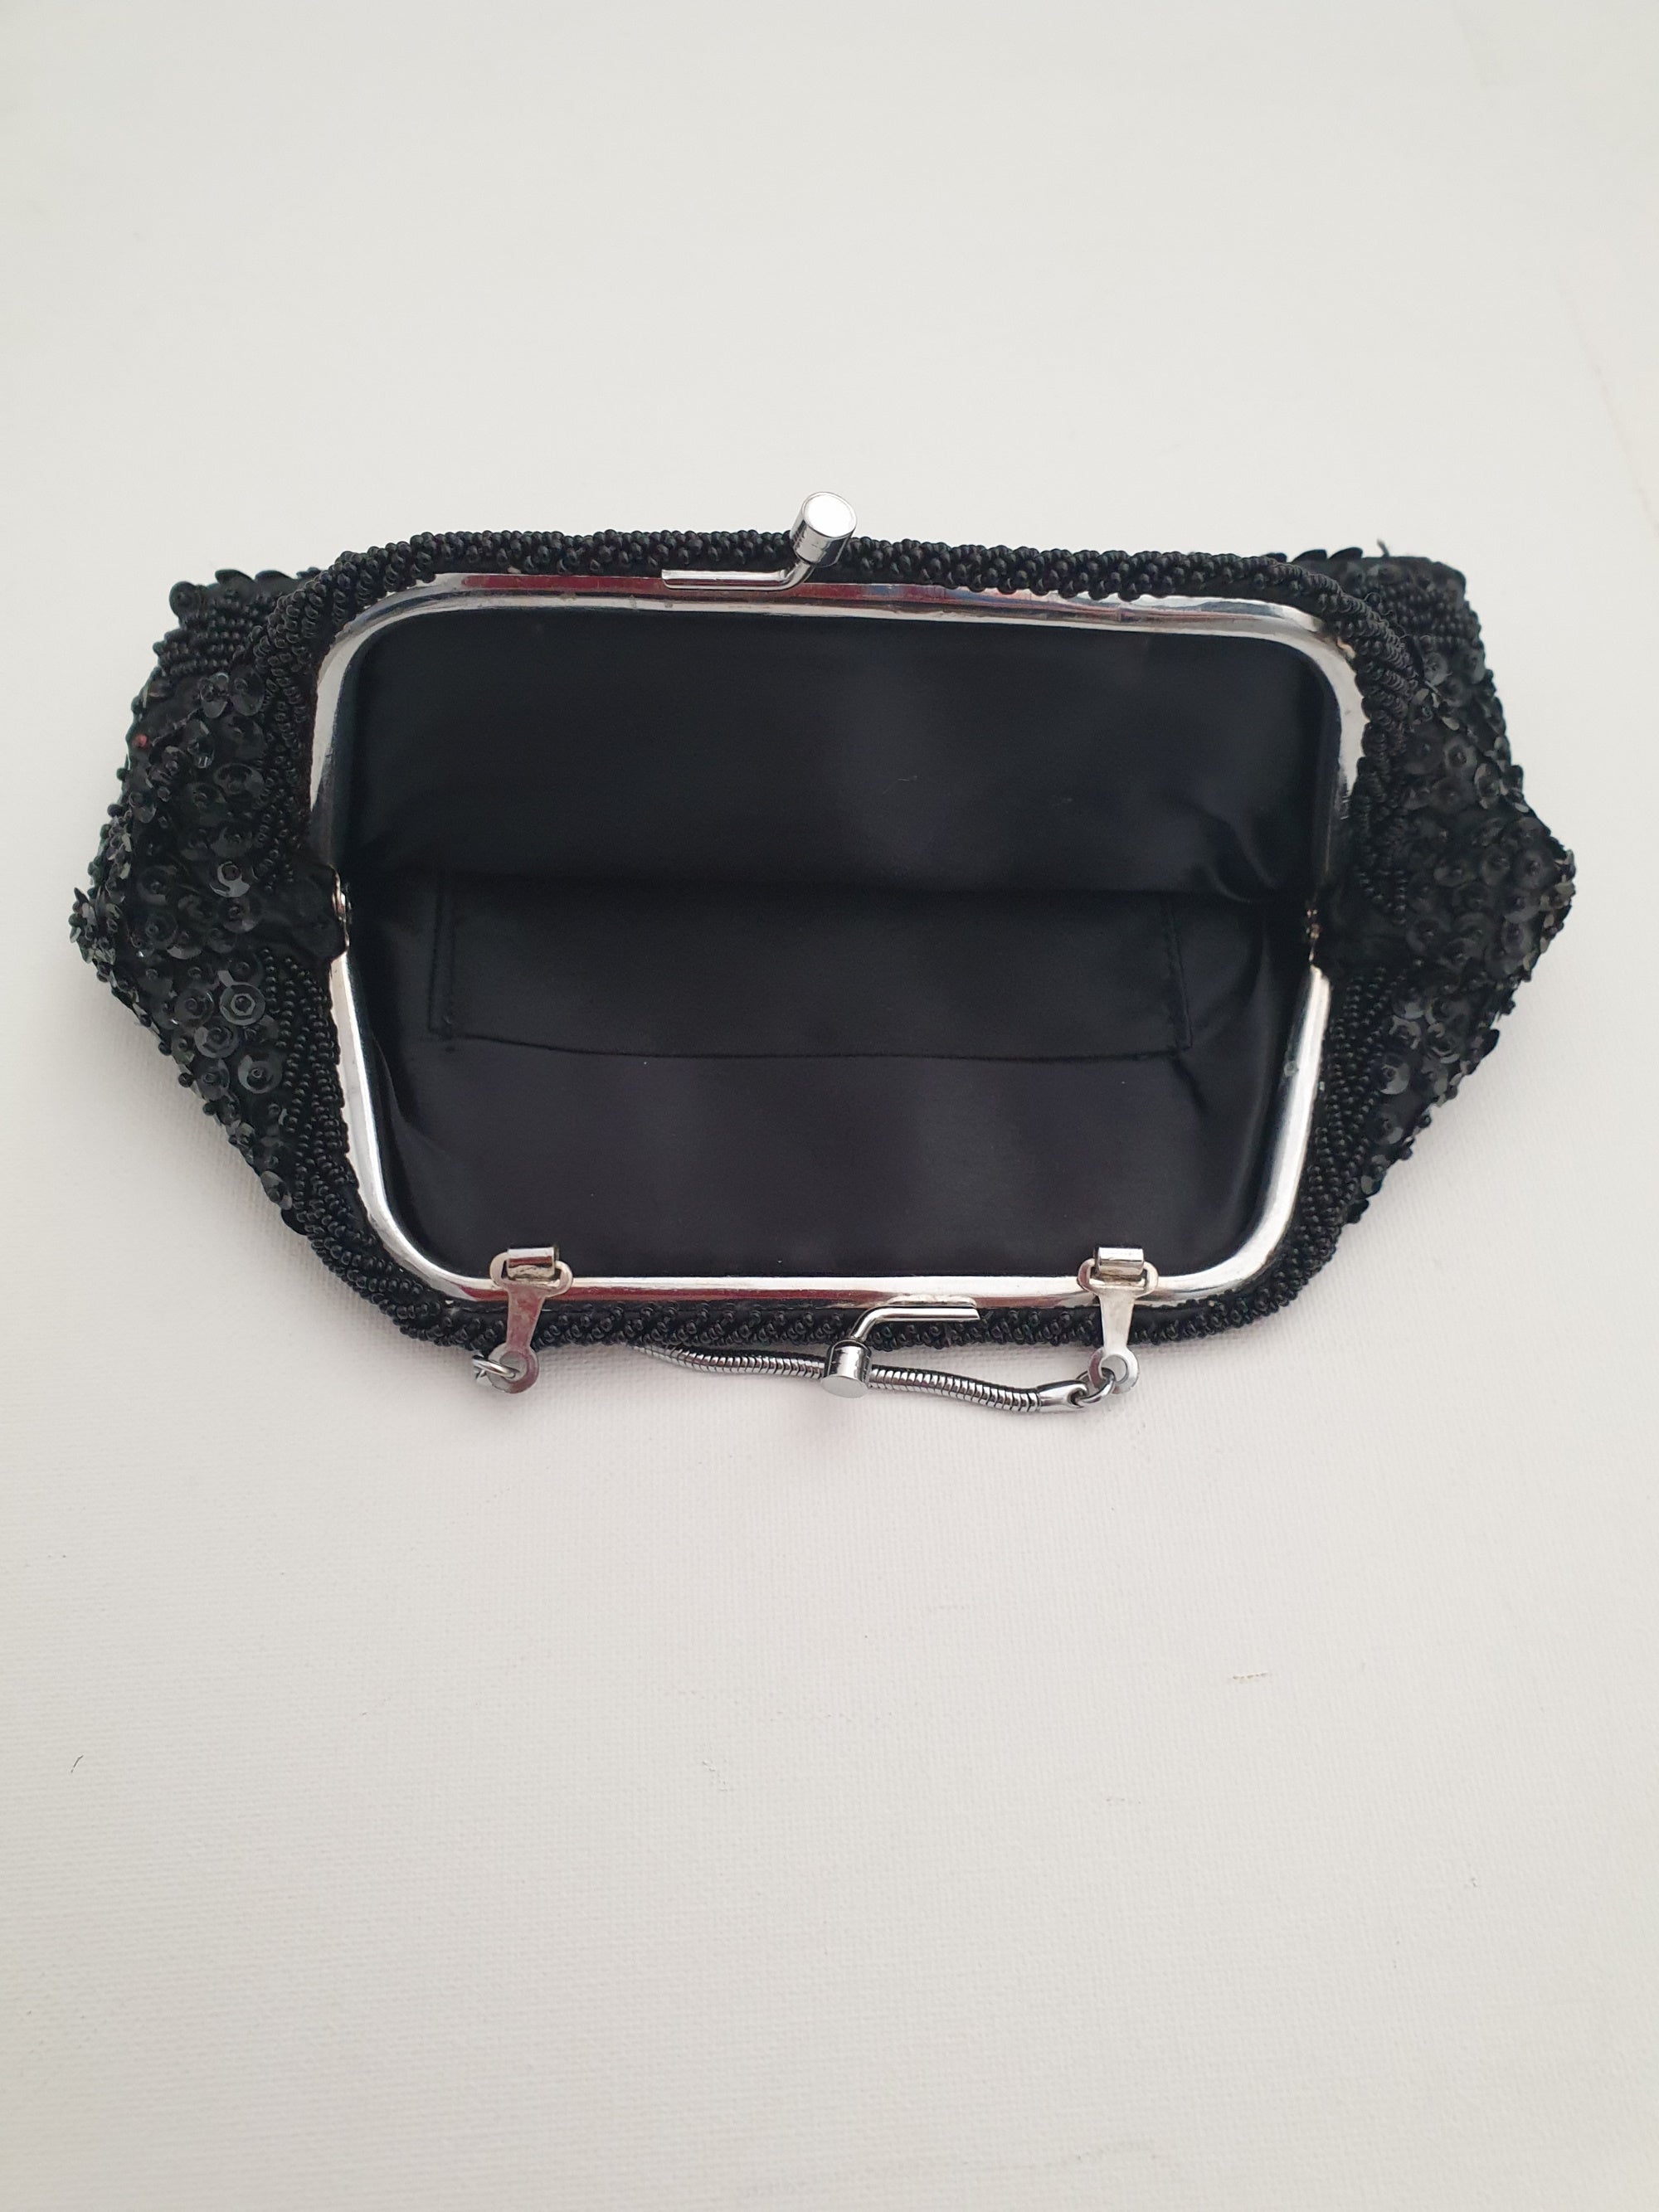 1960s vintage black beaded evening bag or purse